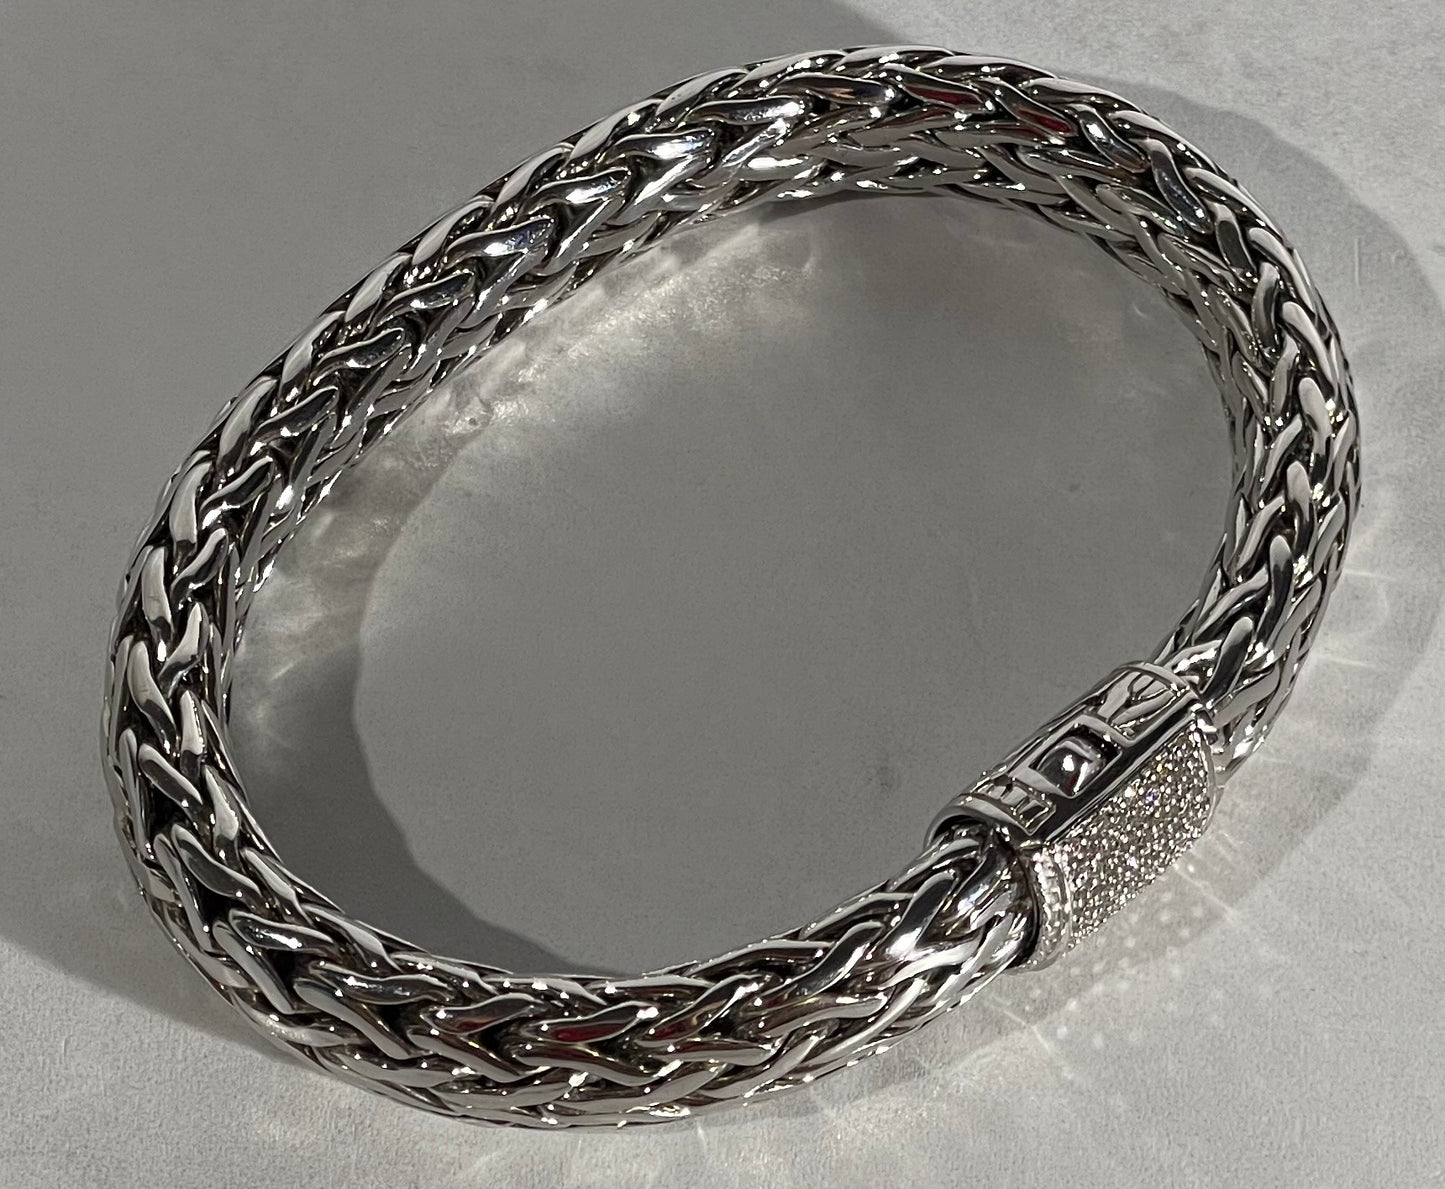 John Hardy 925 Sterling Silver Pave Diamond Clasp Classic Chain Bracelet - Size Large